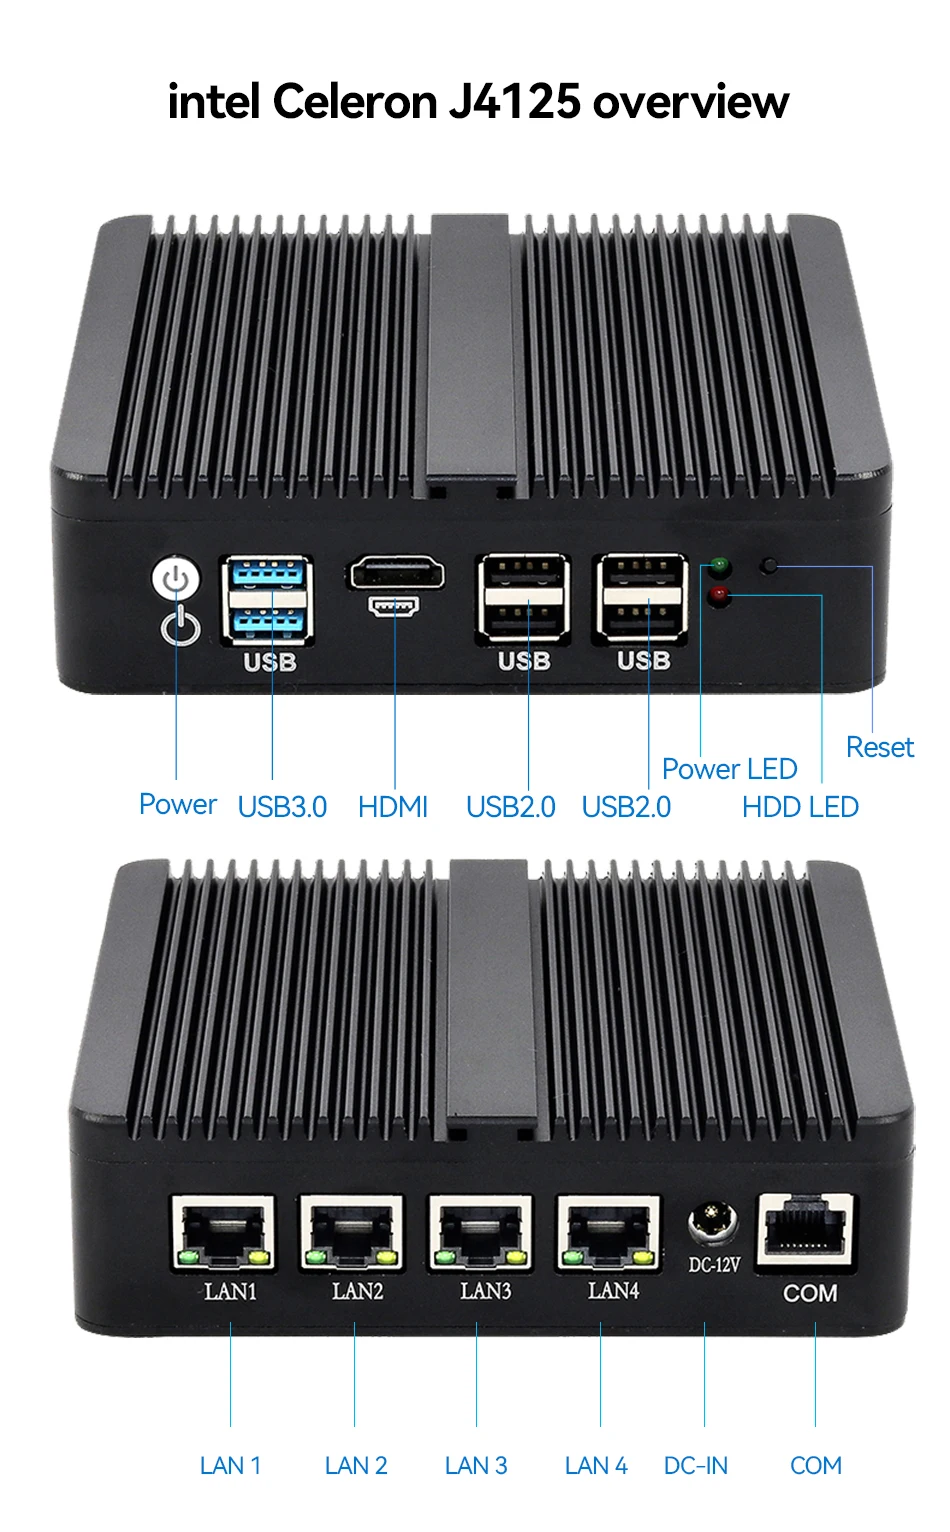 XCY X30A Firewall Router Mini PC Celeron J1900 4x GbE Intel i225V NIC Support WiFi 4G LTE Pfsense OPNsense Linux Appliance images - 6